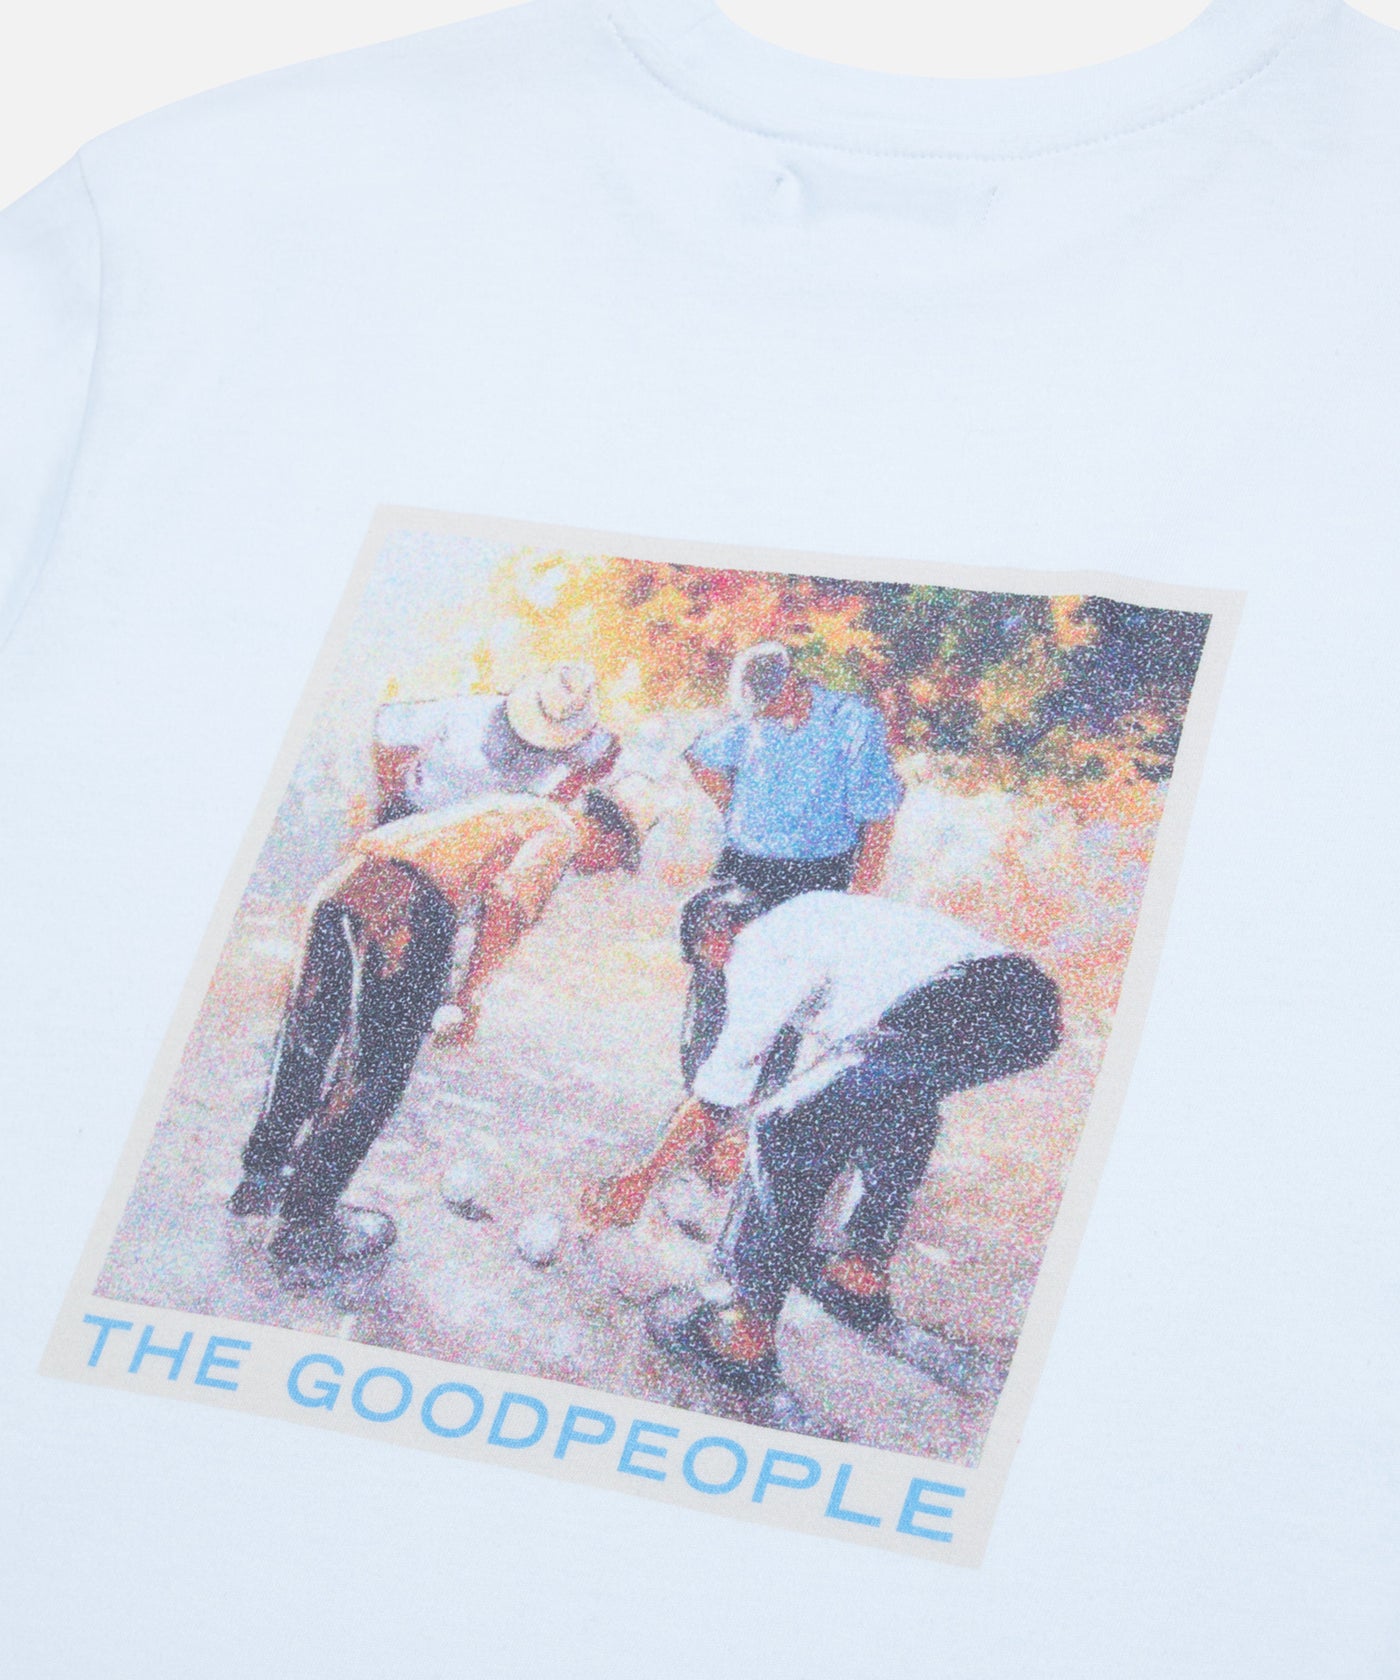 The GoodPeople - Tphoto - 23010911 - White